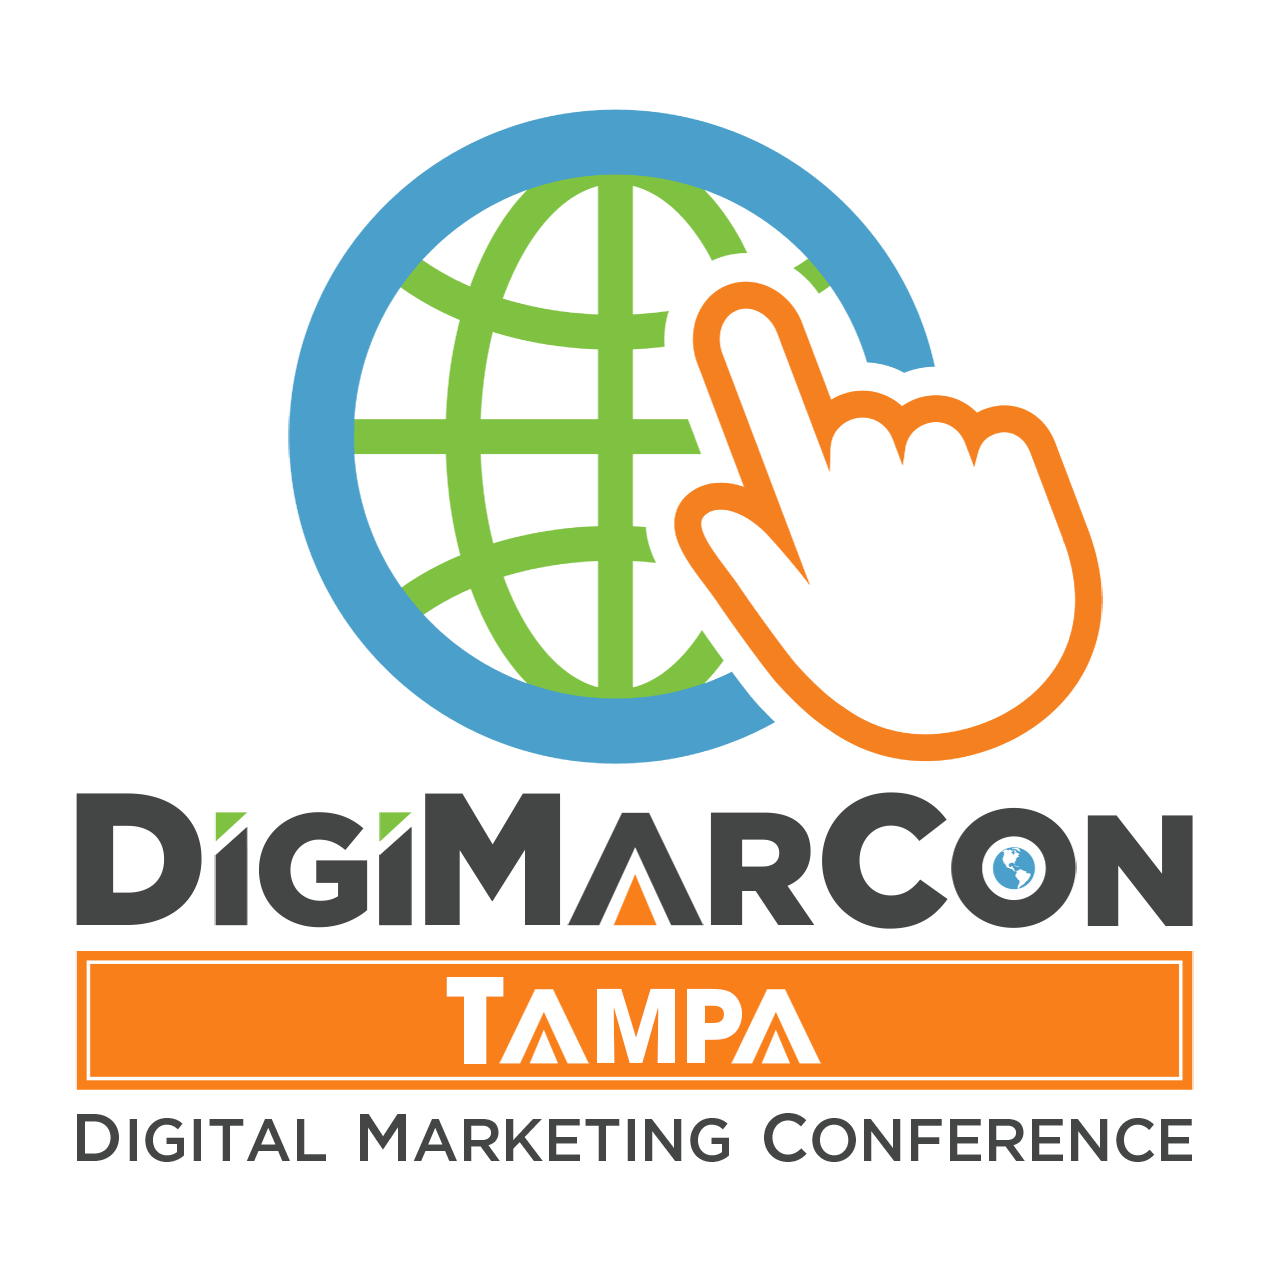 Tampa Digital Marketing, Media & Advertising Conference